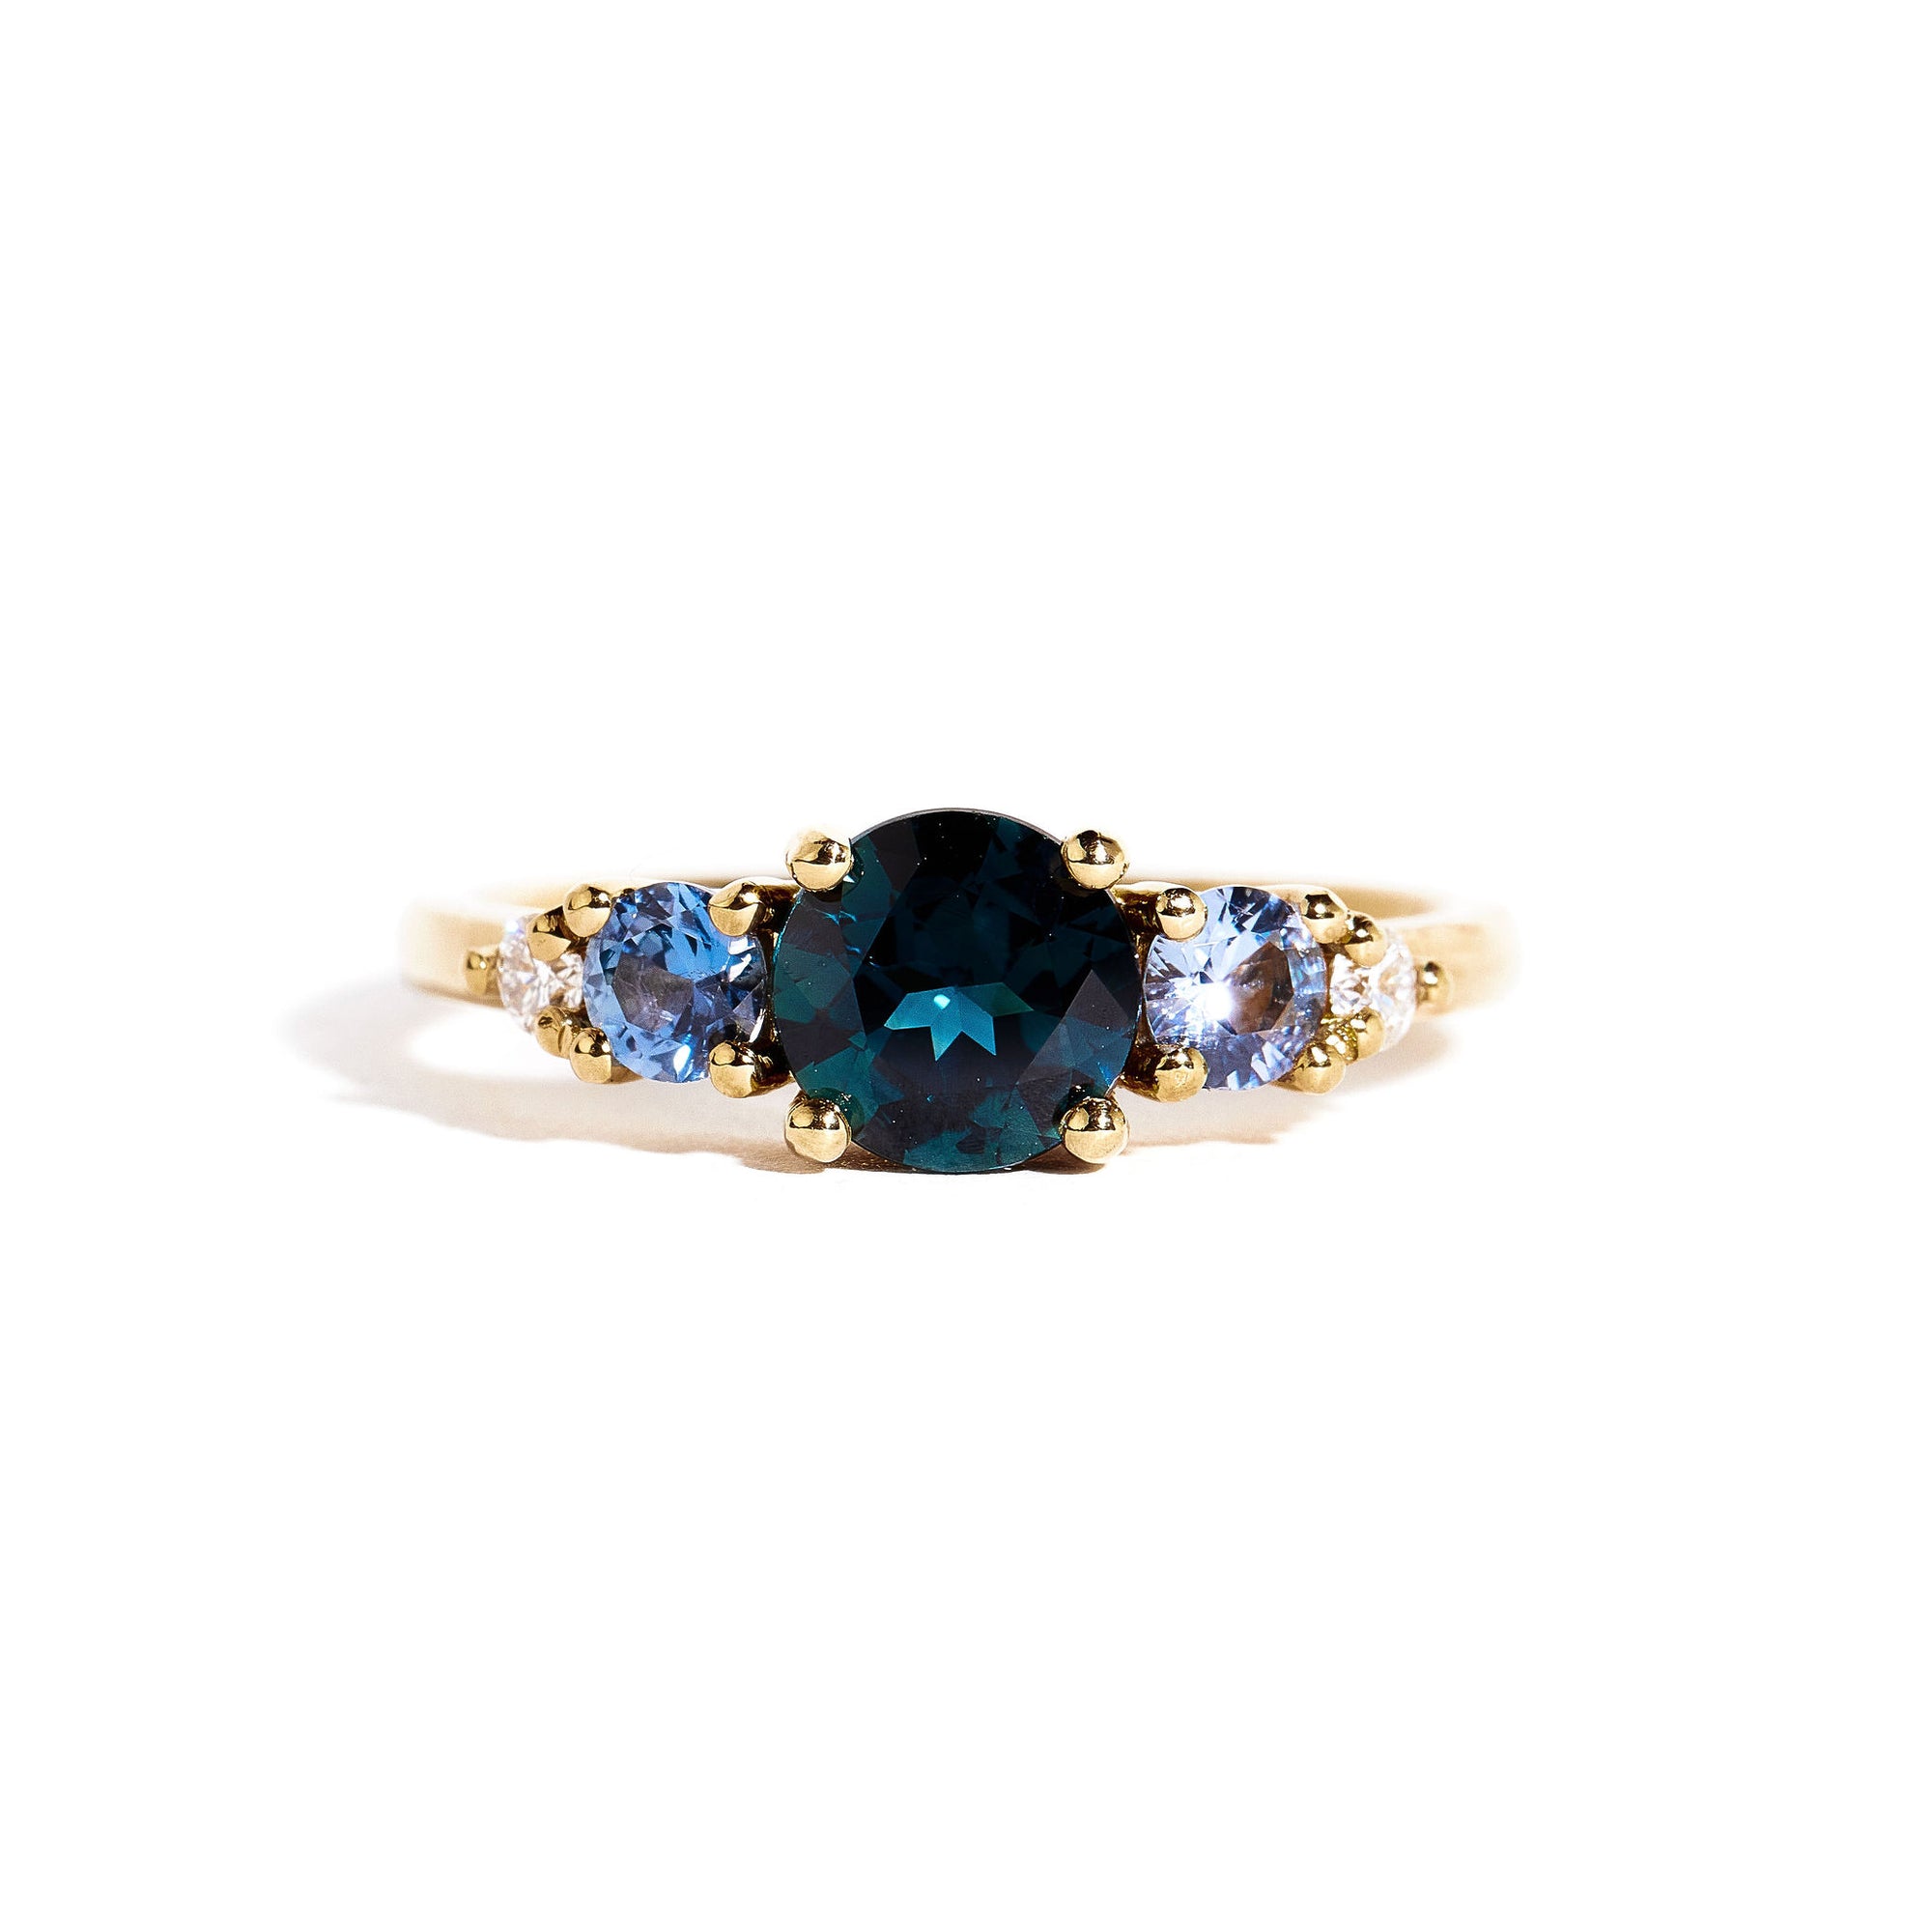 Australian Sapphires and Diamond Ring | Handmade Engagement Ring in 18ct Yellow Gold